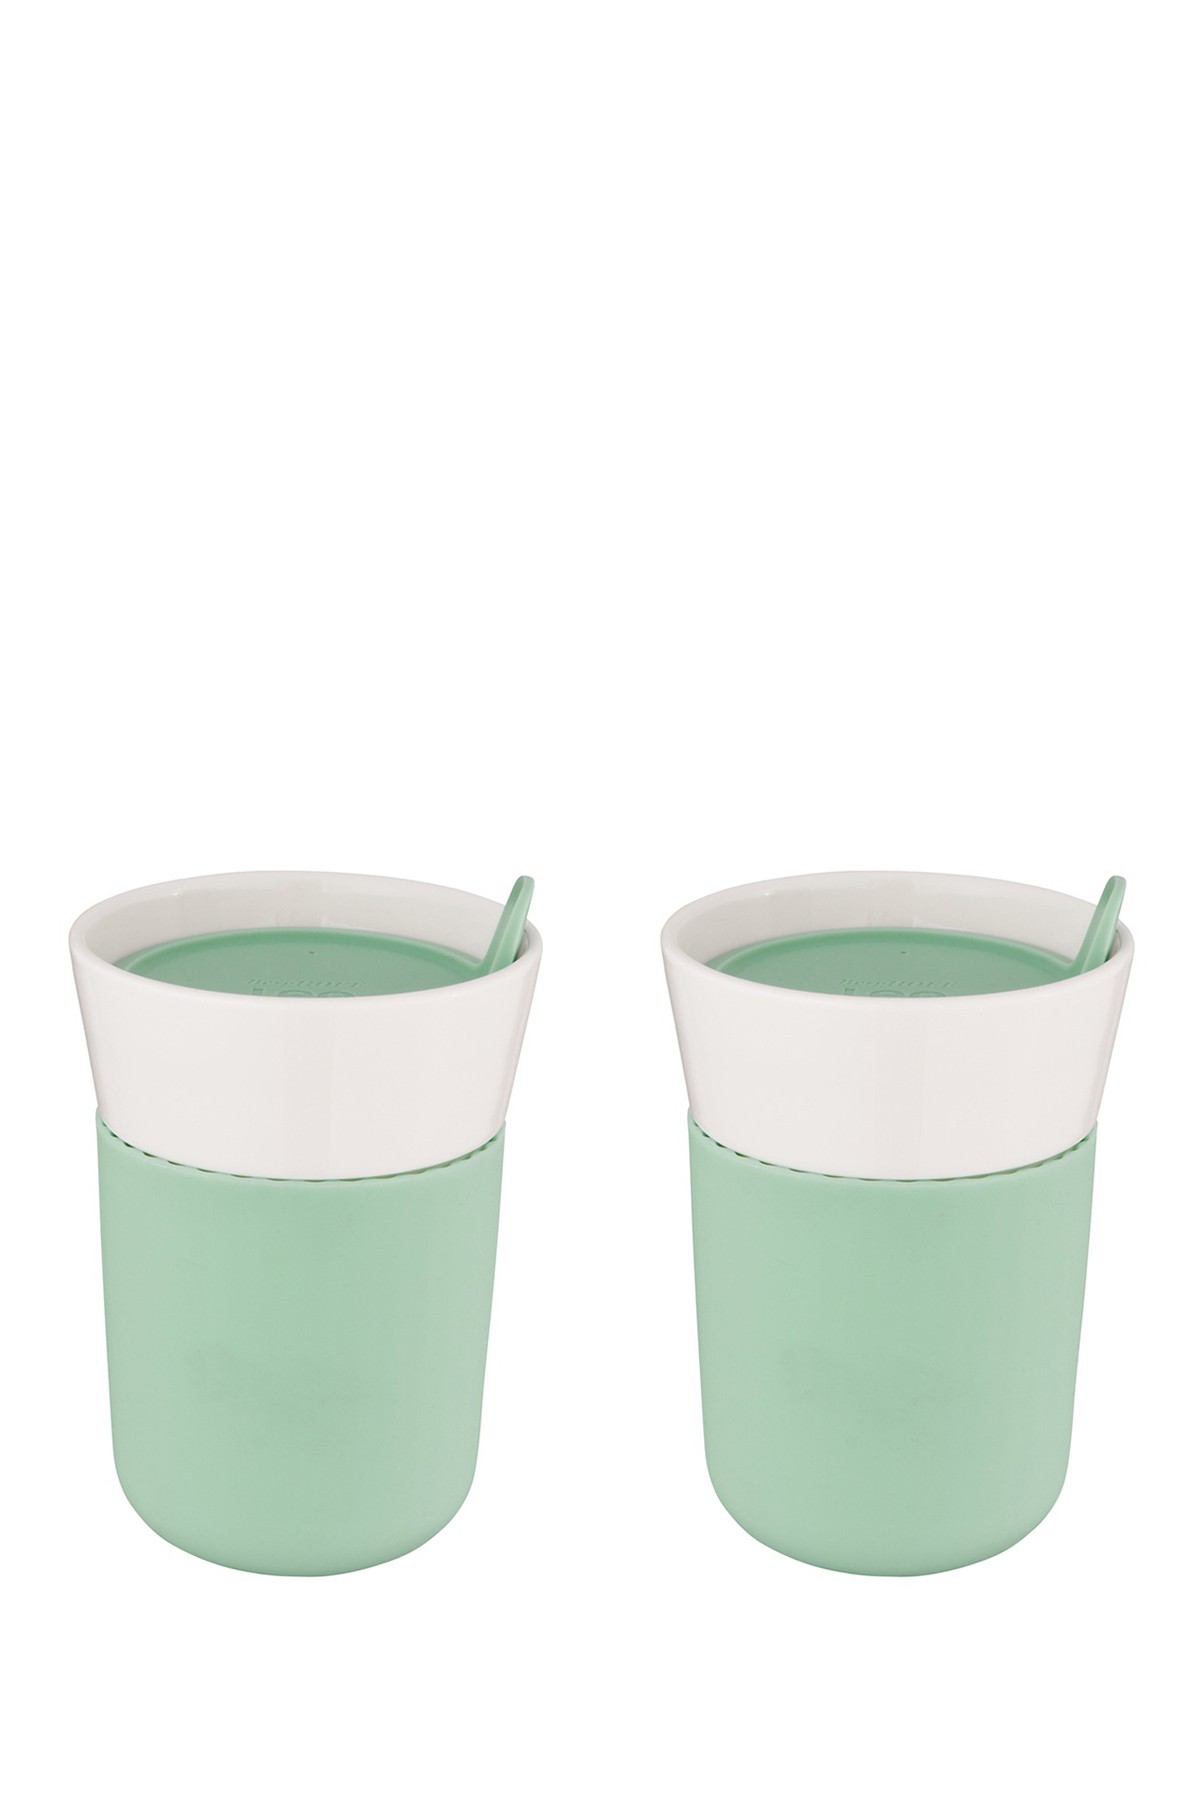 Leo Green Porcelain Travel Mug - Set of 2 BergHOFF